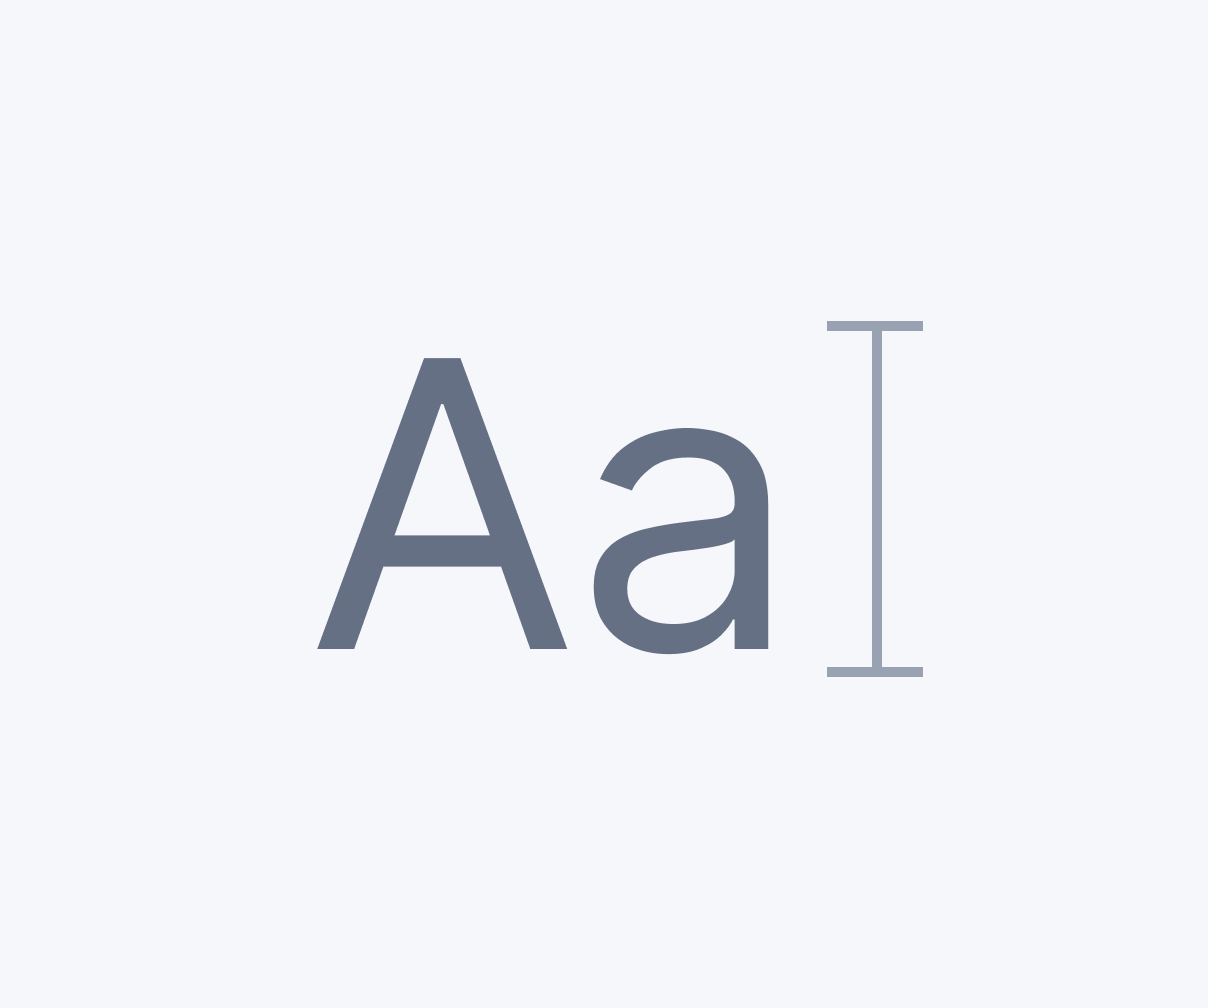 Typography image